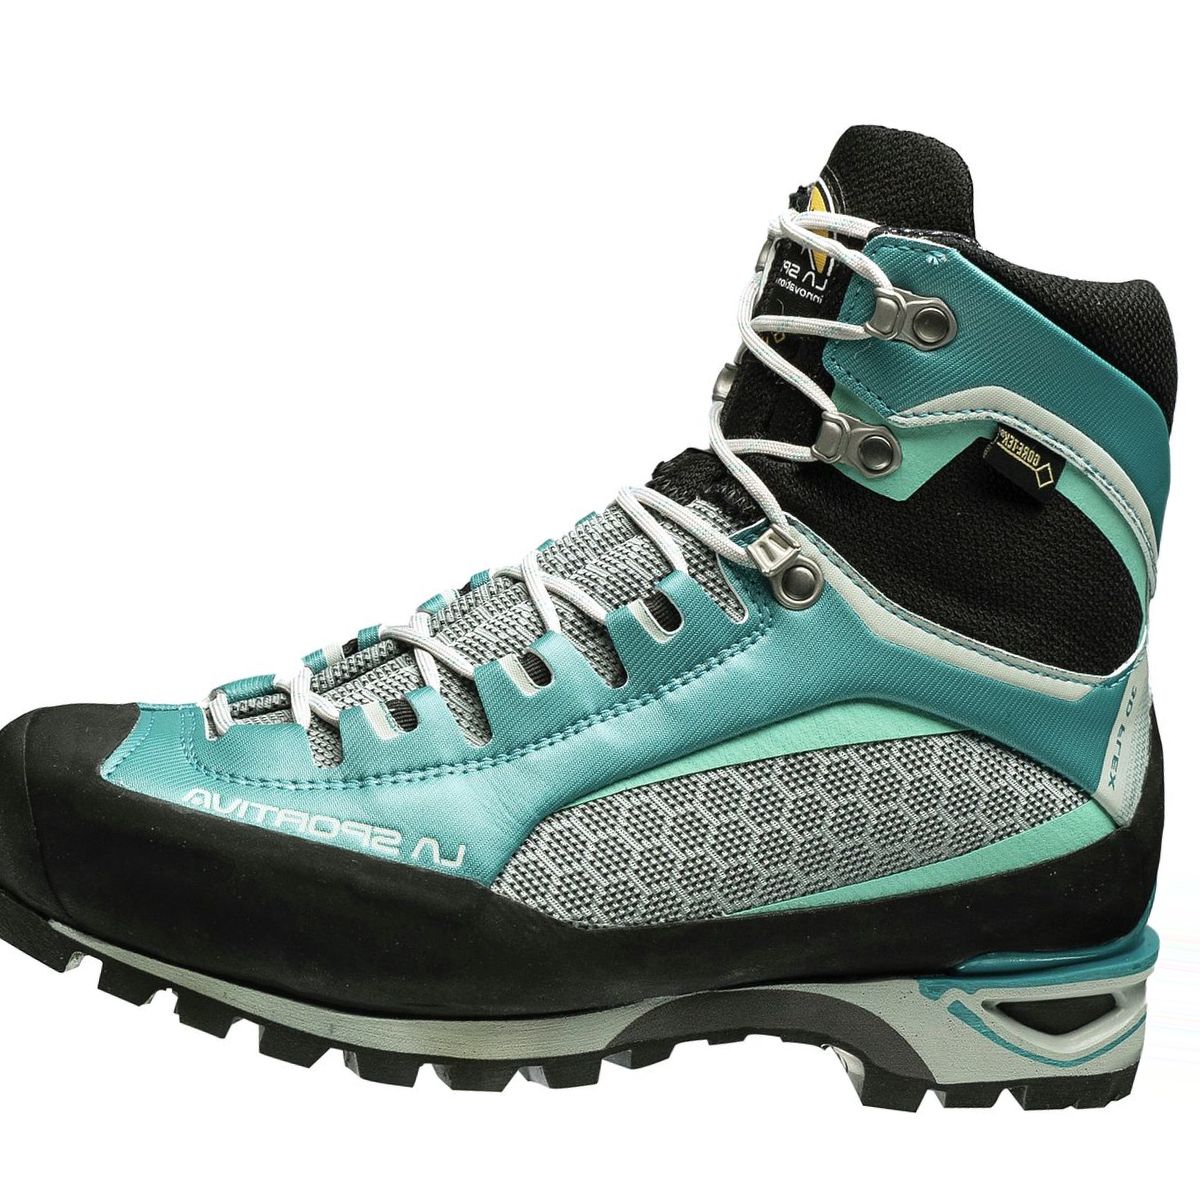 La Sportiva Trango Tower GTX Mountaineering Boot - Women's